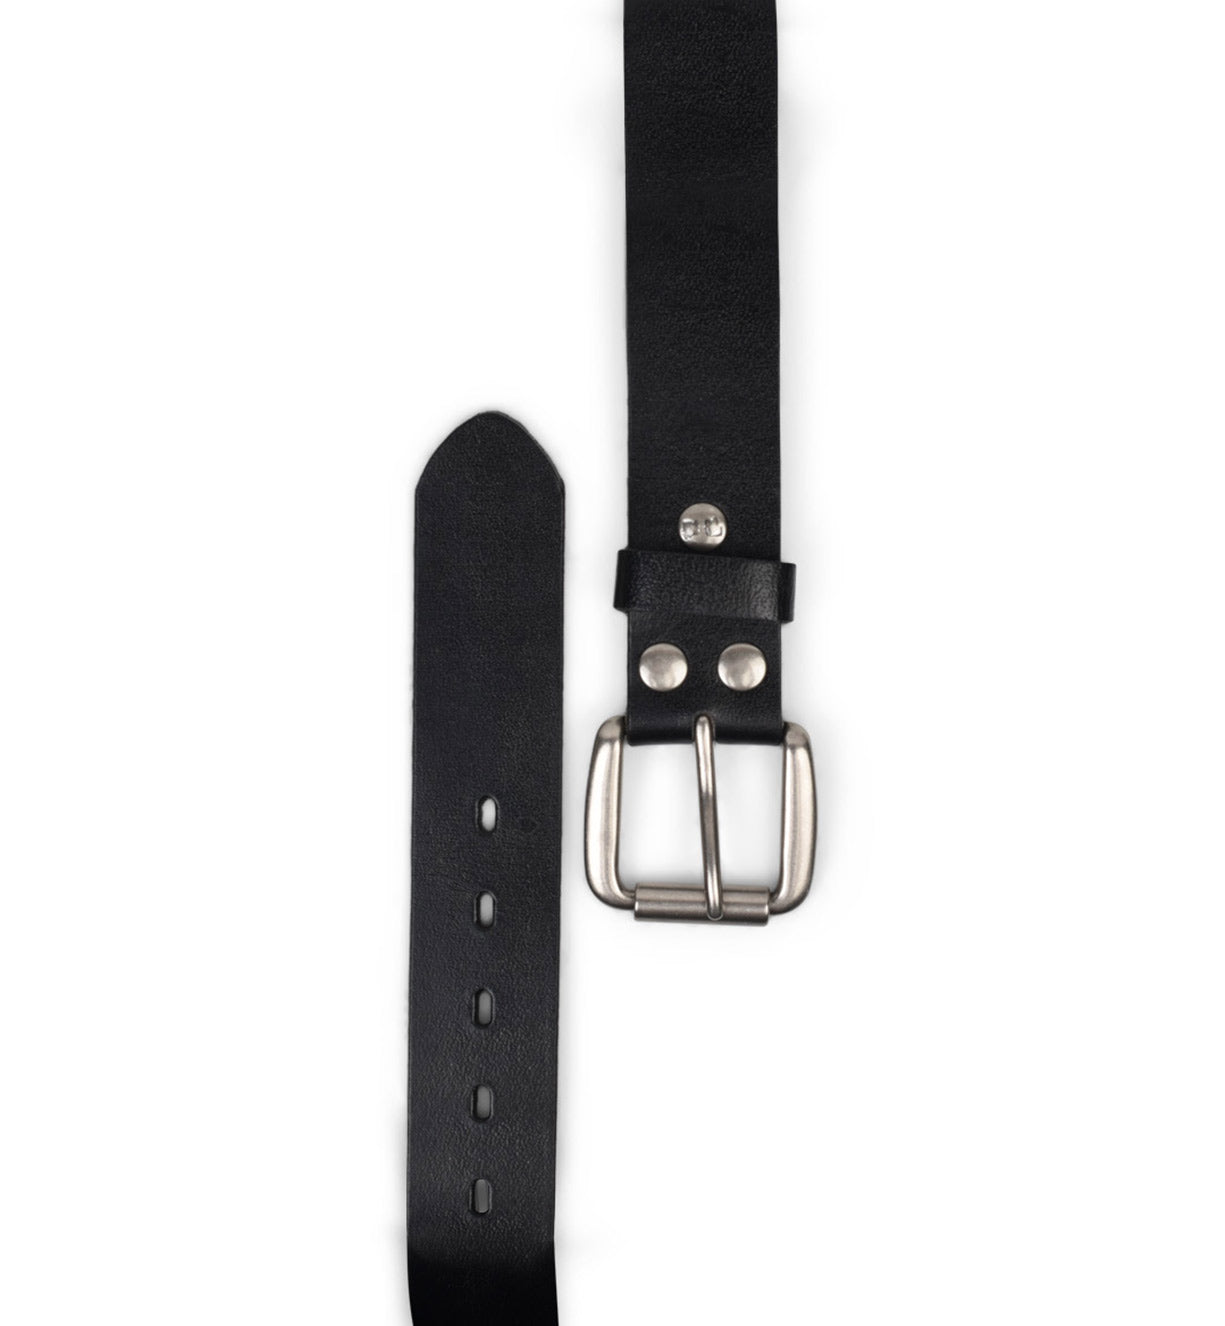 A Bed Stu Drifter black leather belt on a white background.